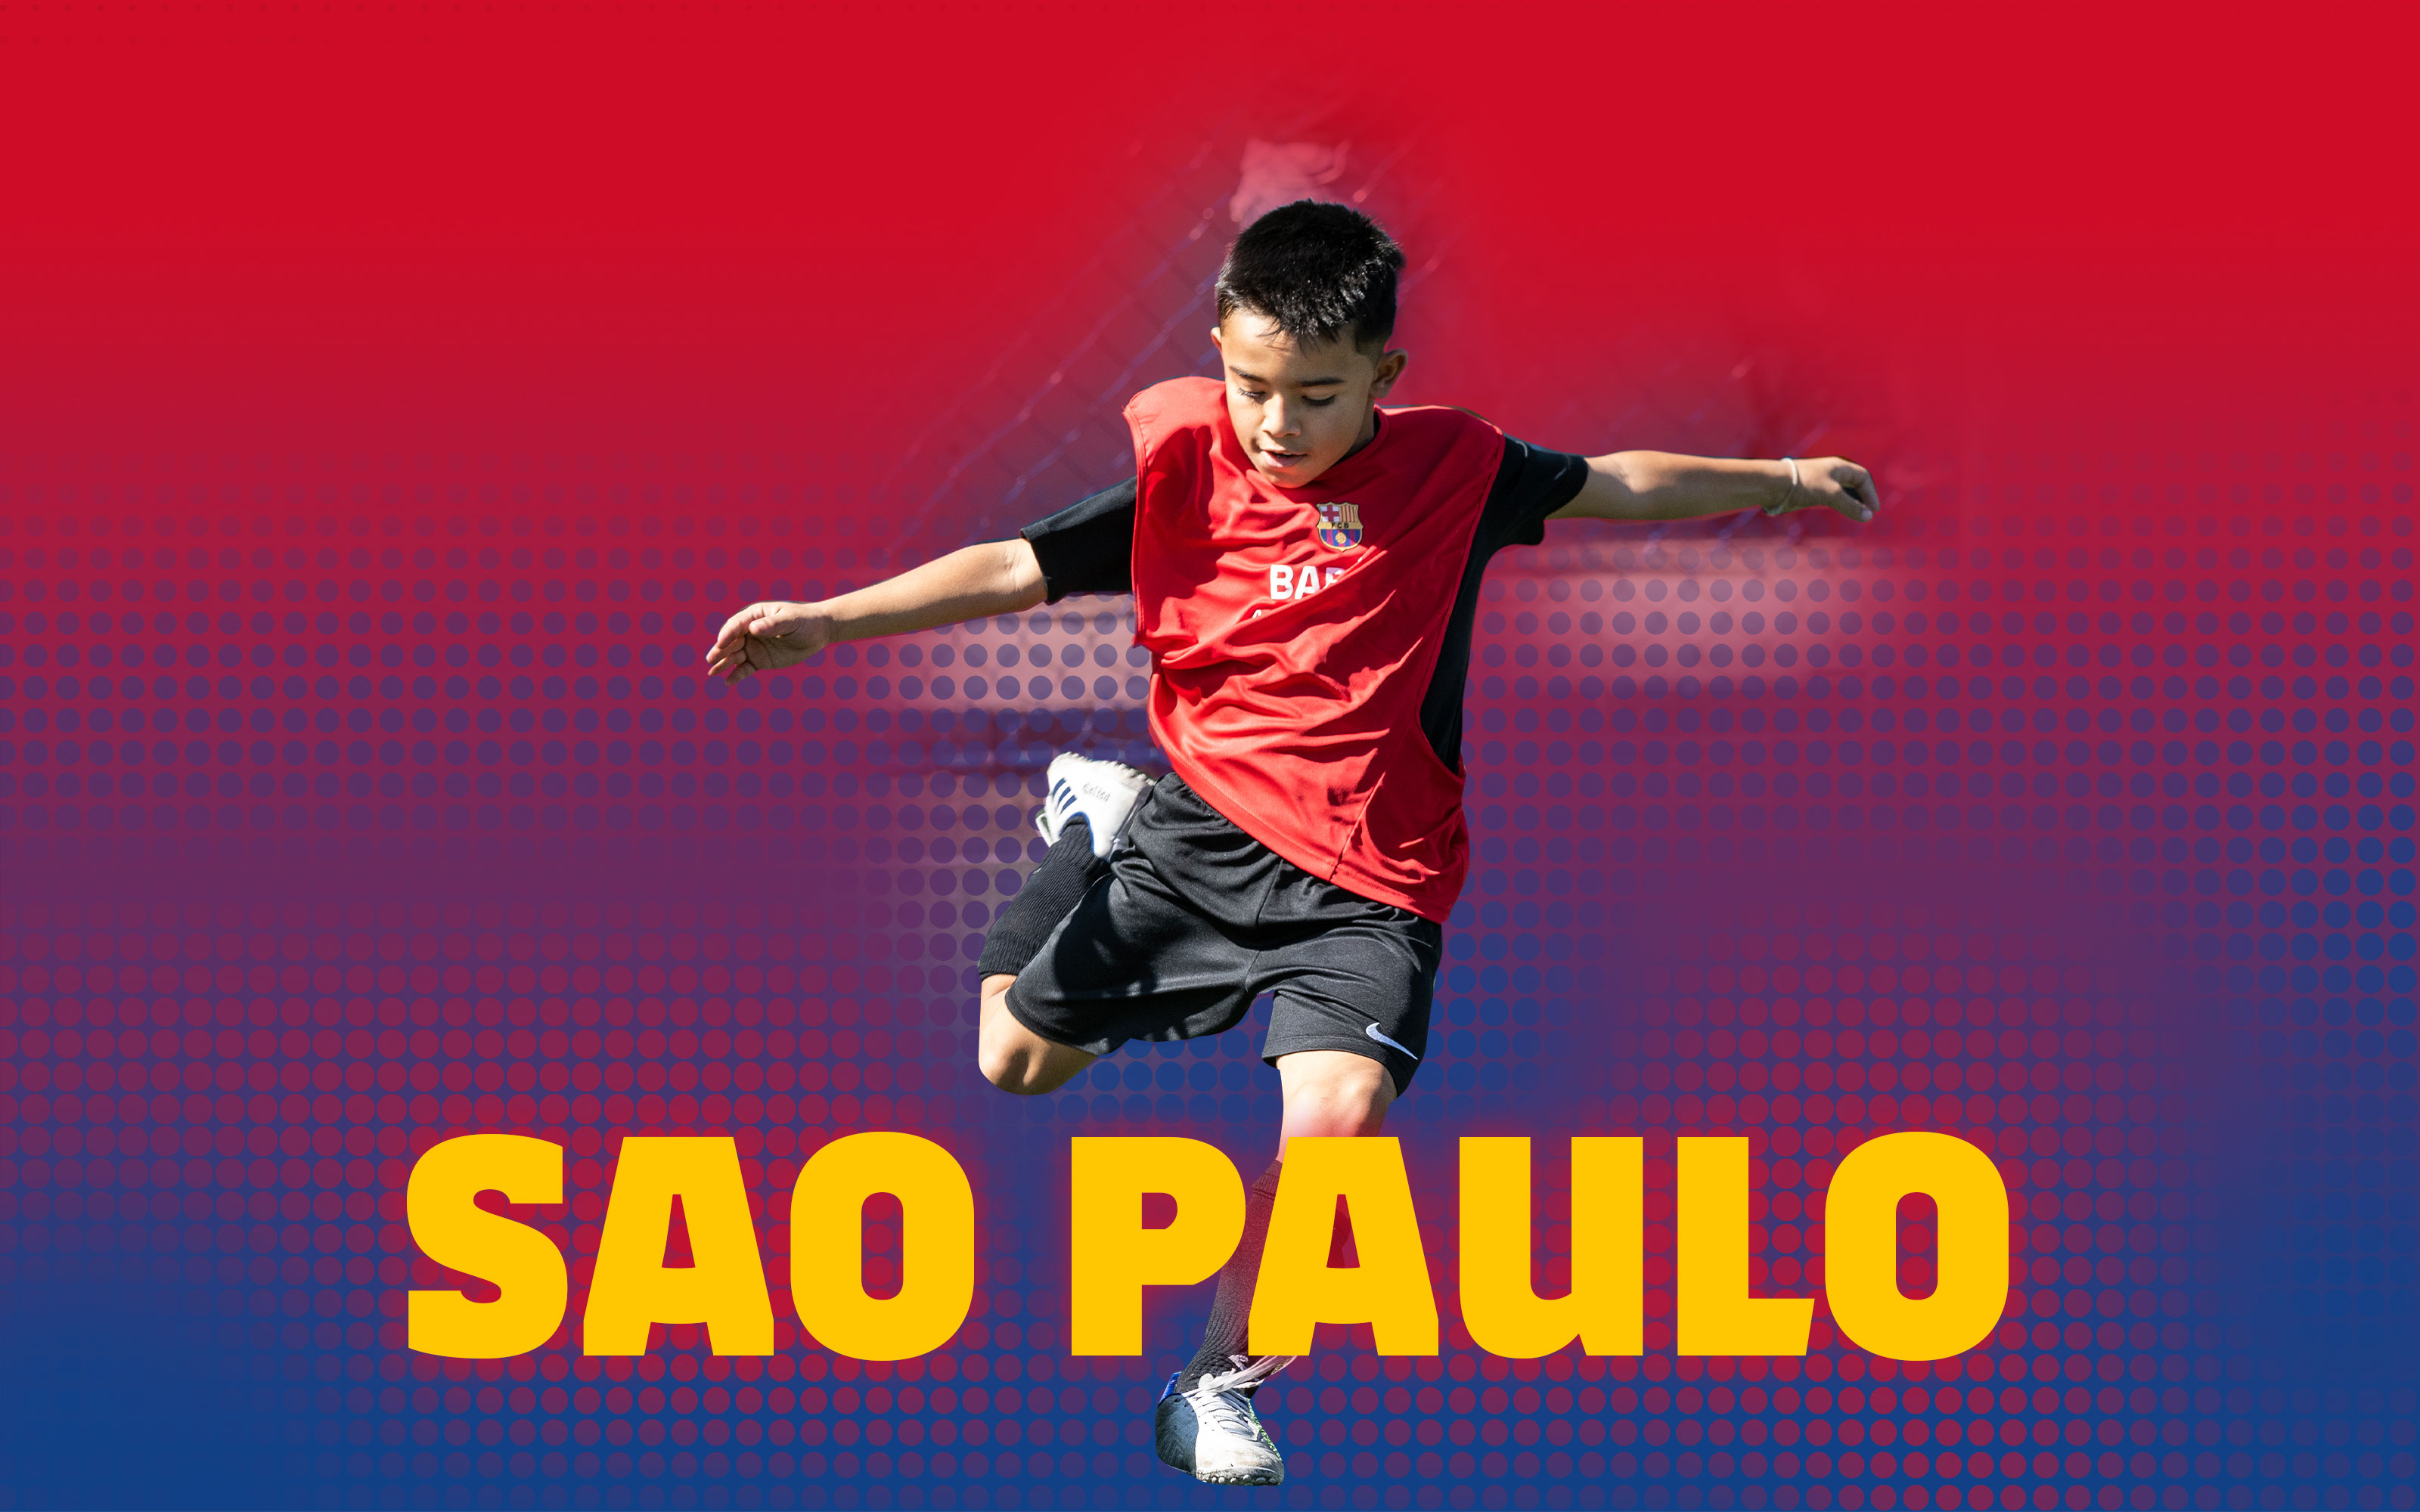 Sao Paulo Football School > Home